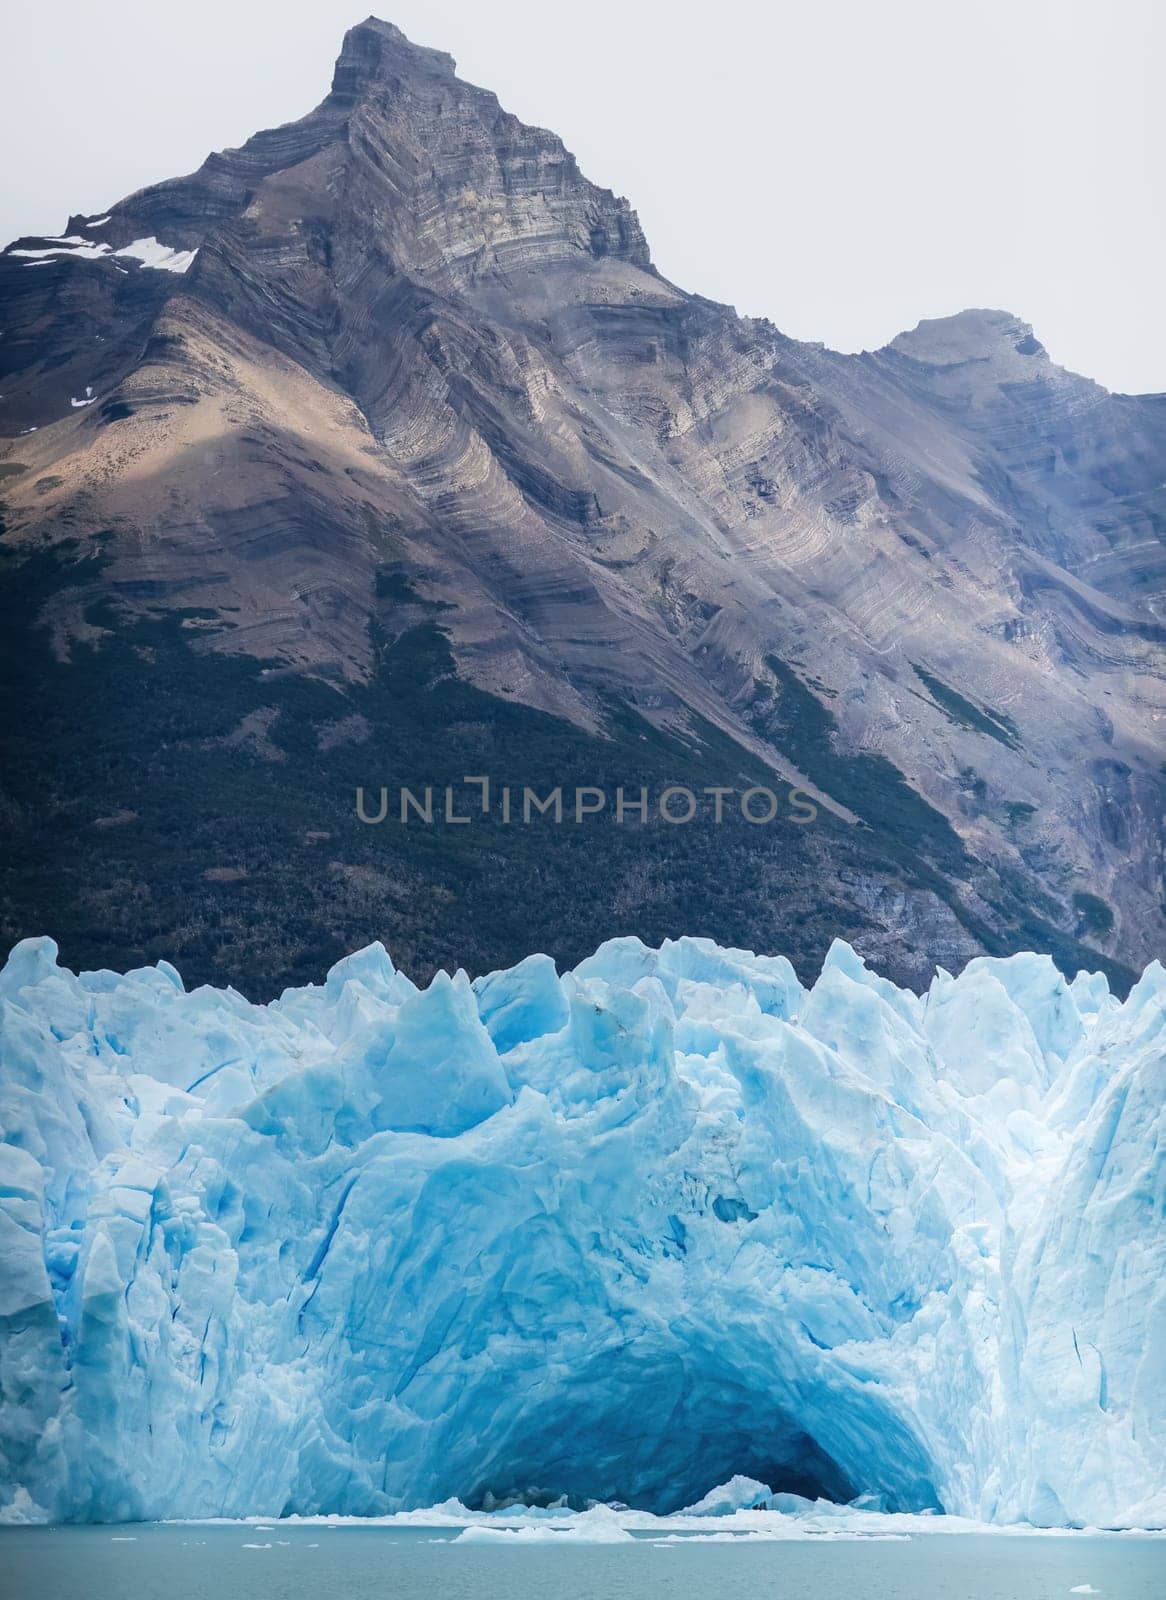 Majestic Ice Glacier Against Rugged Mountain Backdrop by FerradalFCG